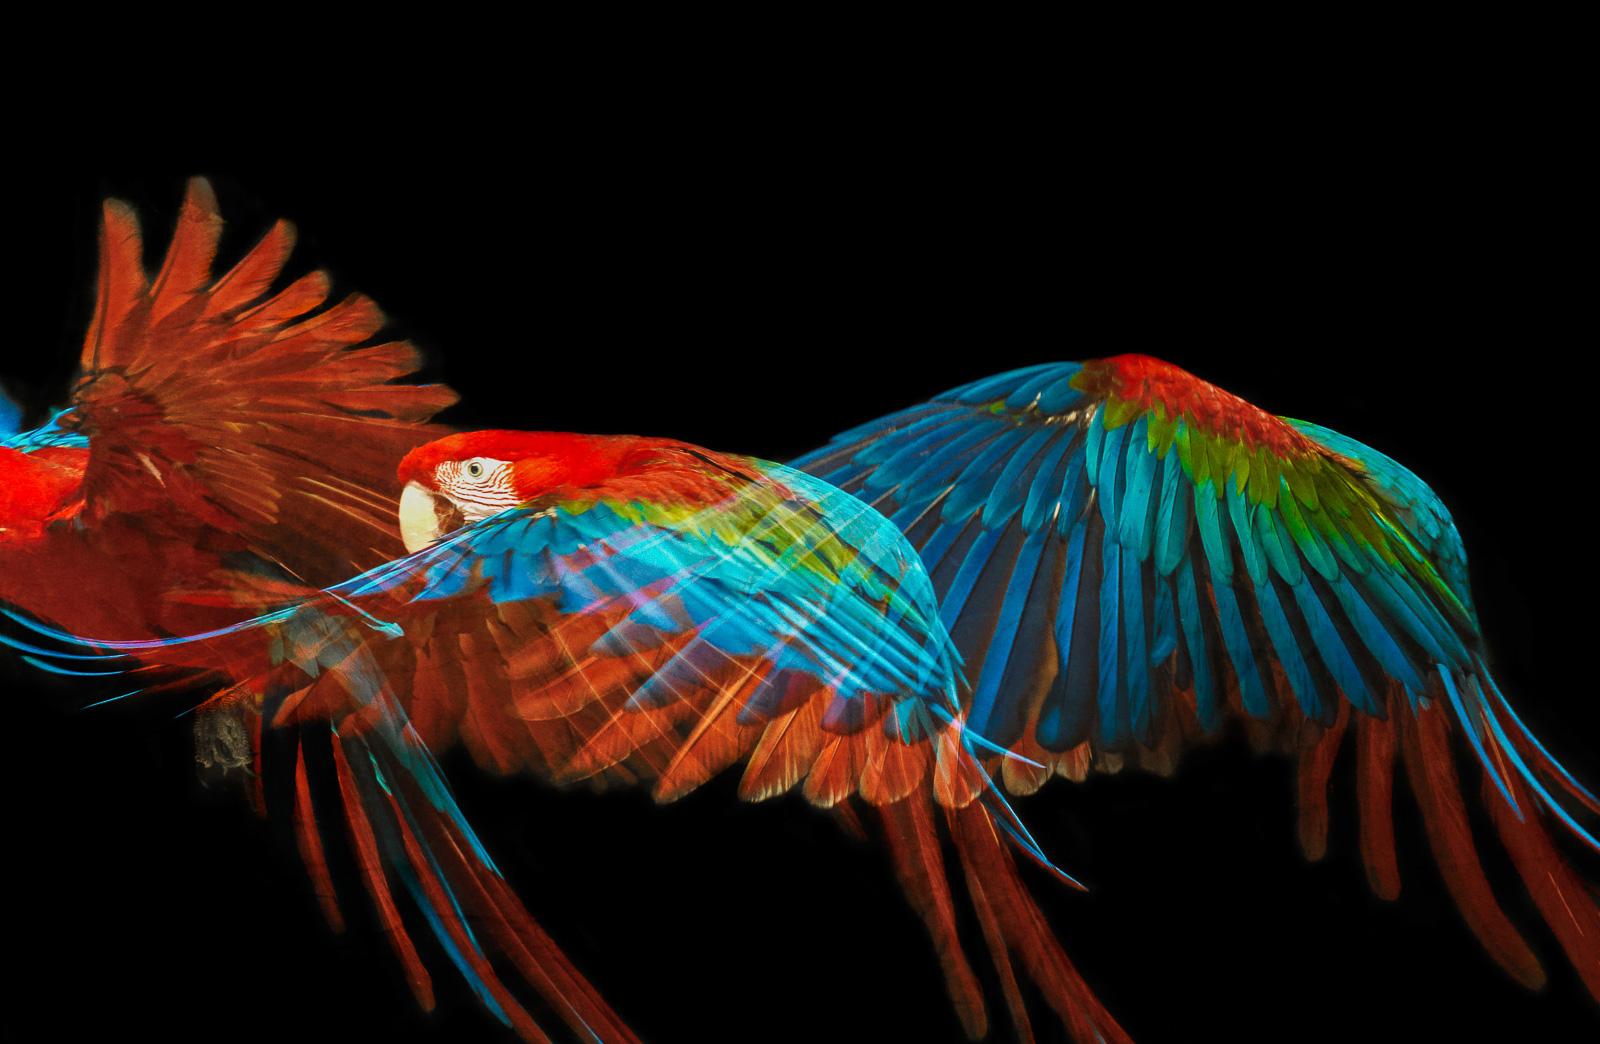 Macaw #1 - Animal signed limited edition bird contemporary fine art print, Black - Contemporary Photograph by Tim Platt